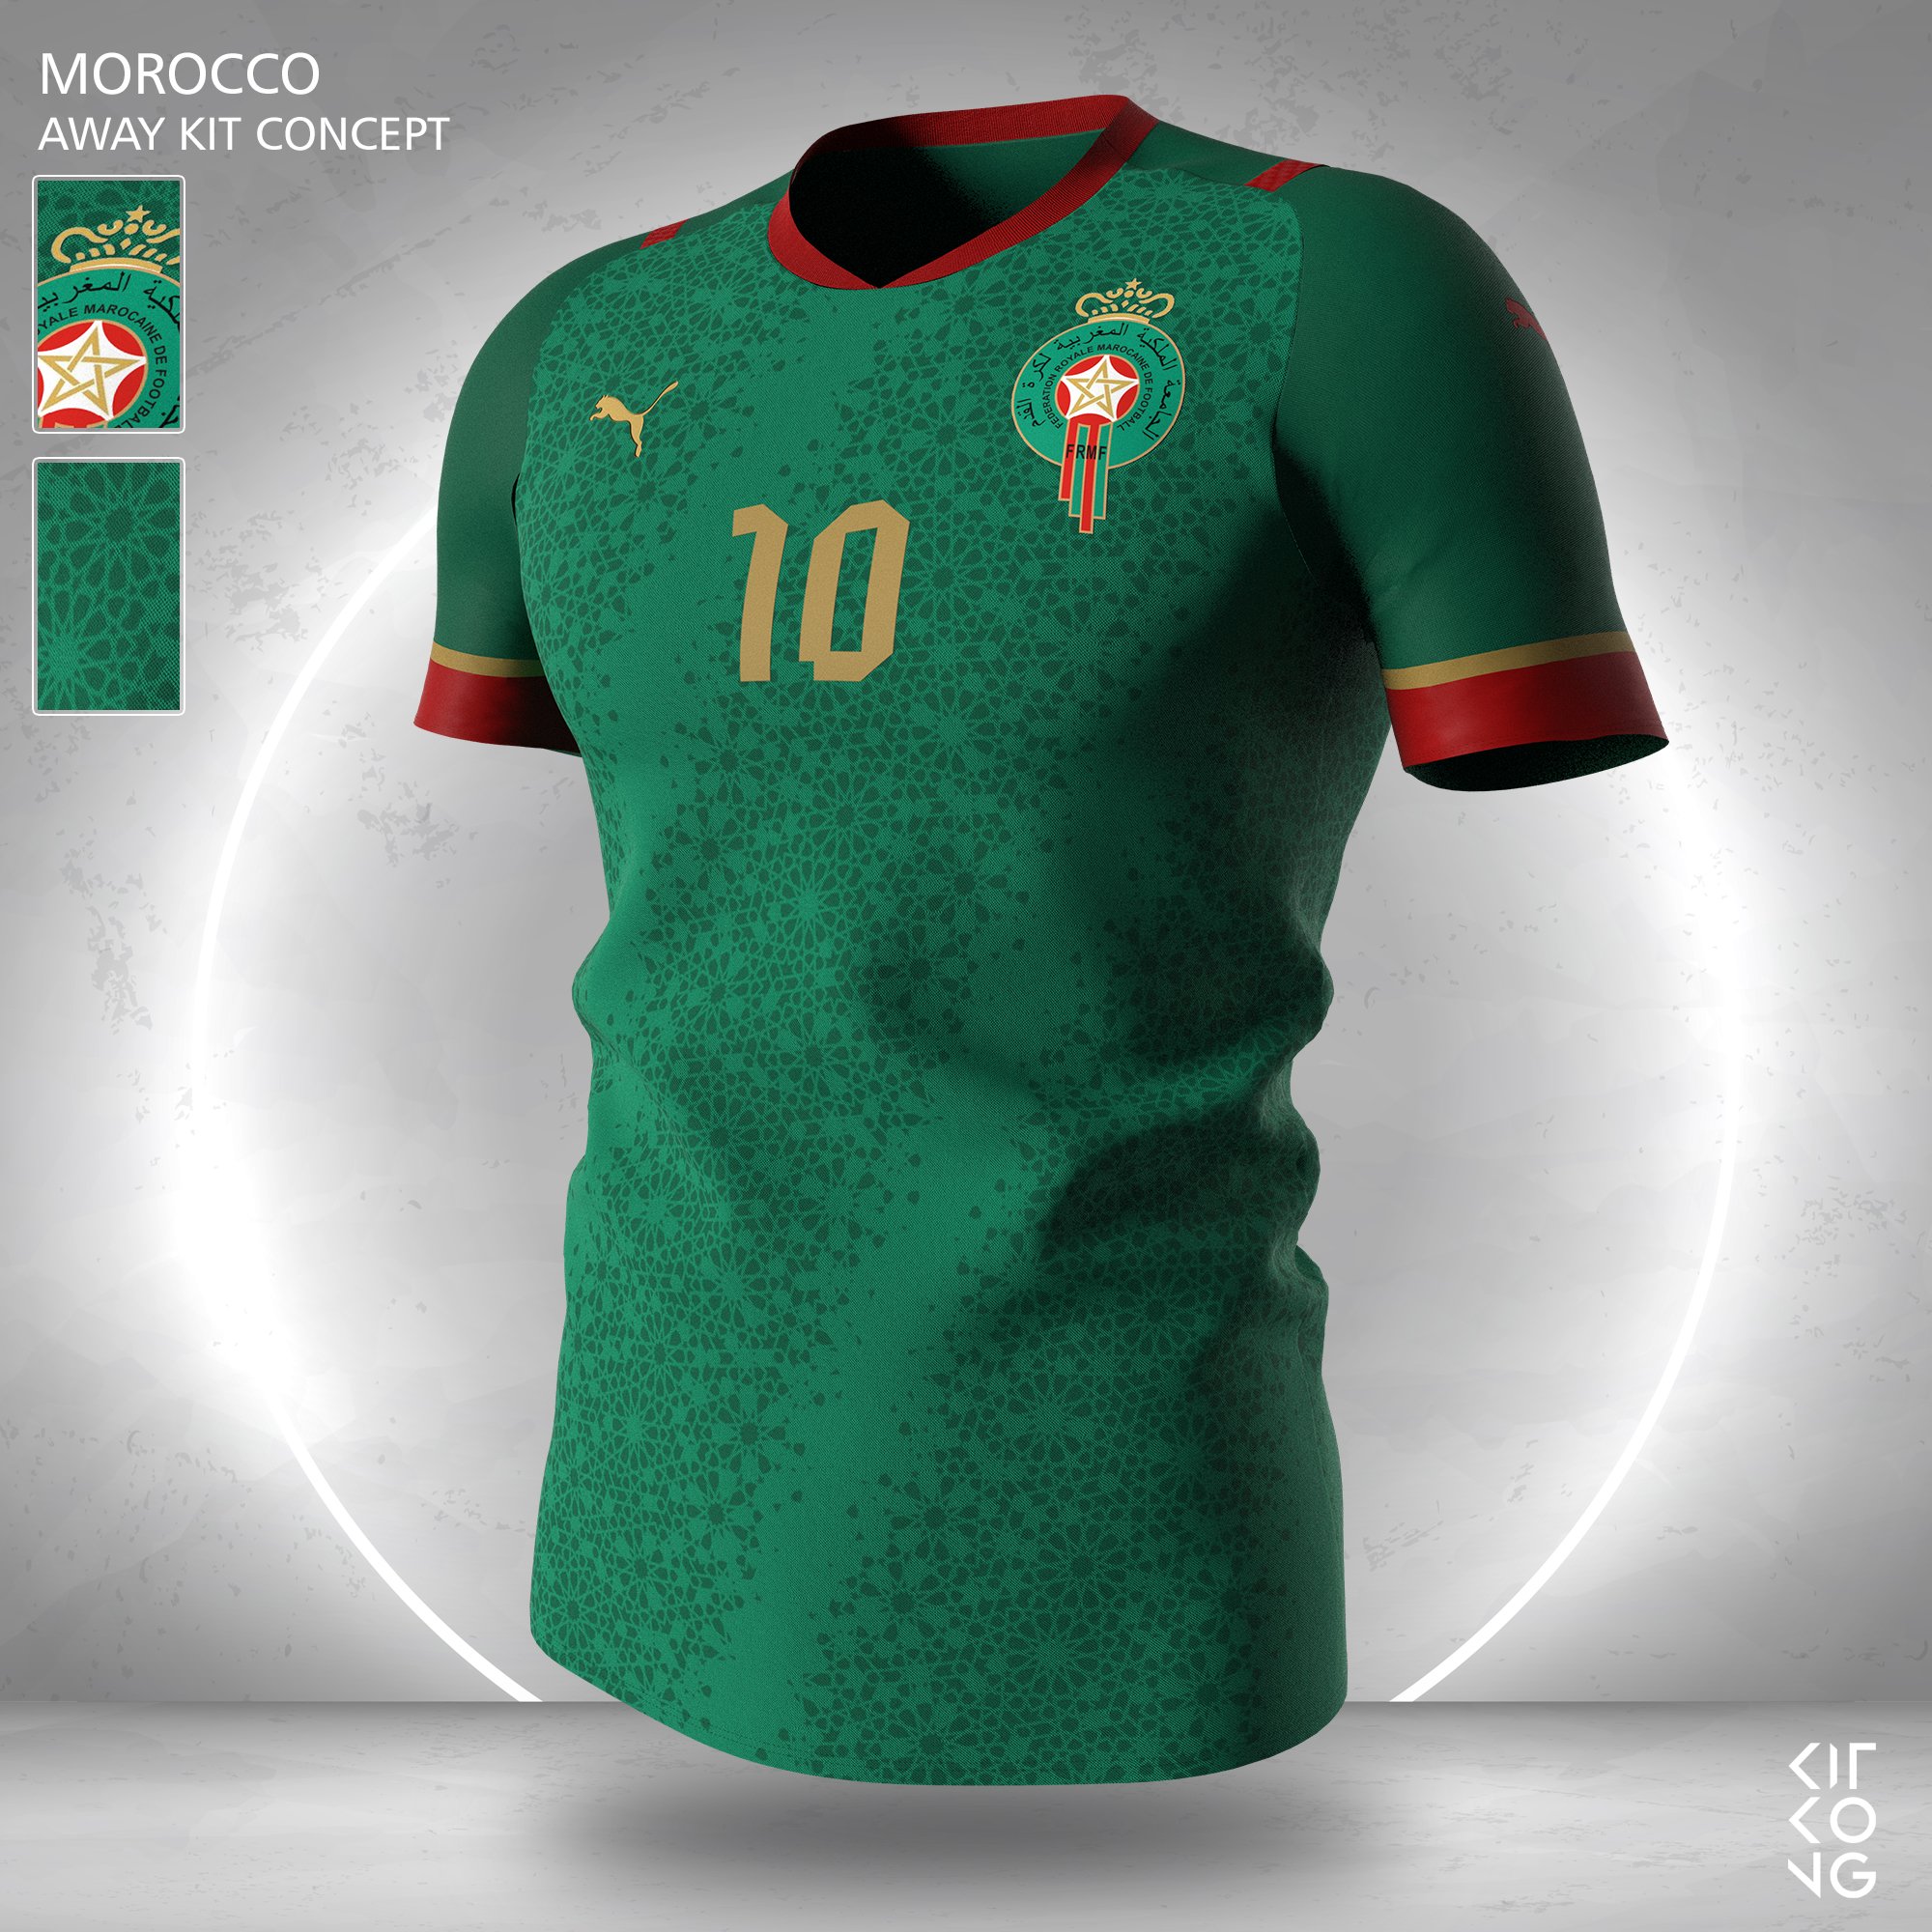 KitKong on Twitter: "#WC2022 Away kit concept for @EnMaroc 🇲🇦 @FRMFOFFICIEL @Moroccotoken @OFFICIALMTF2K18 @AfrykanskiF @xoxabstract @farasha0 @lionsdelatlass @dmsportma @JoueursMA @532off #Qatar2022 #jersey #design #footballkits ...